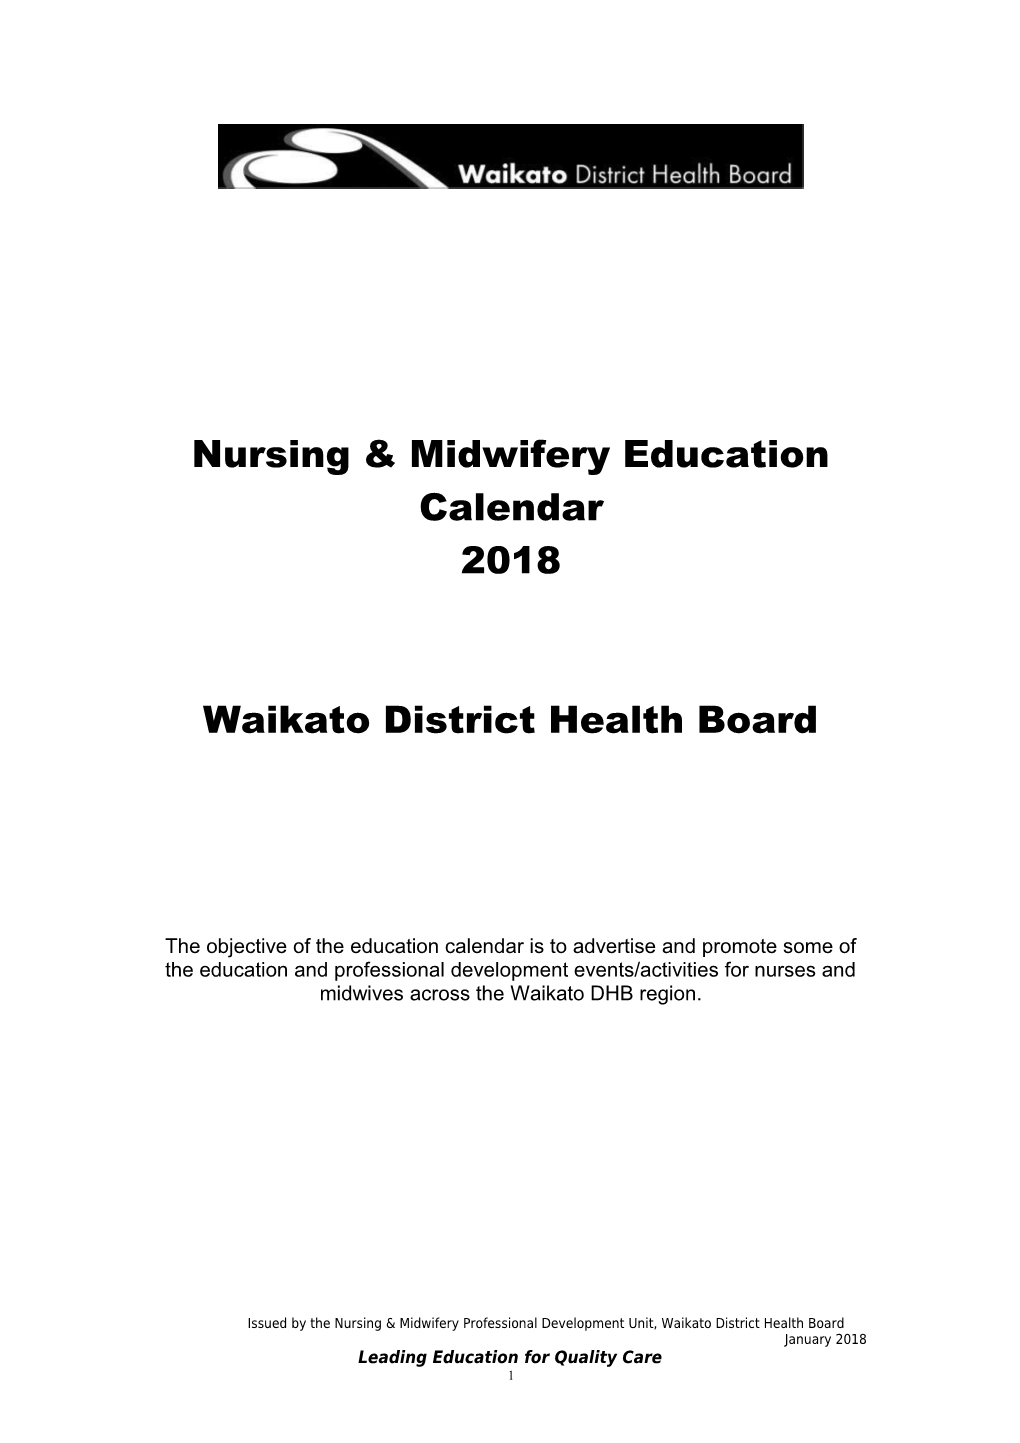 Nursing & Midwifery Education Calendar